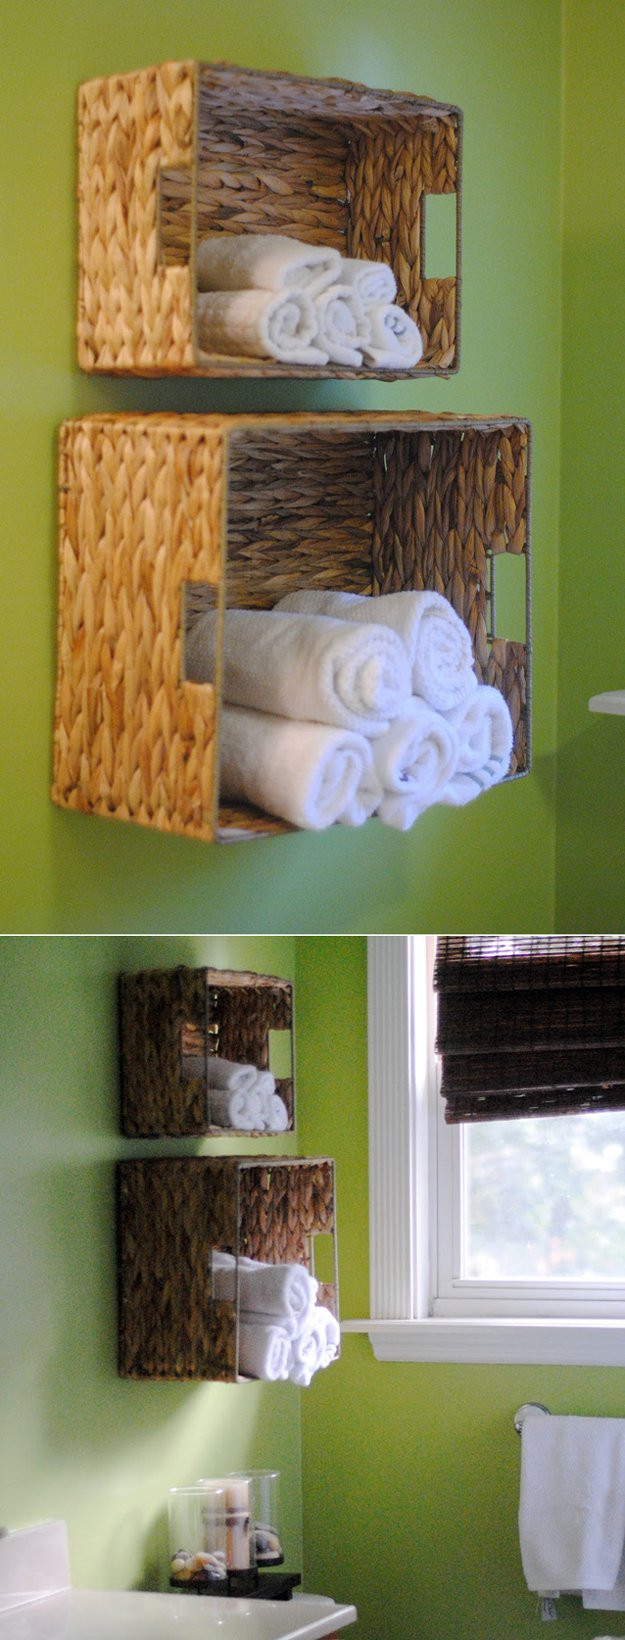 Best ideas about DIY Towel Storage
. Save or Pin 15 Minute DIY Bathroom Organization Ideas DIY Ready Now.